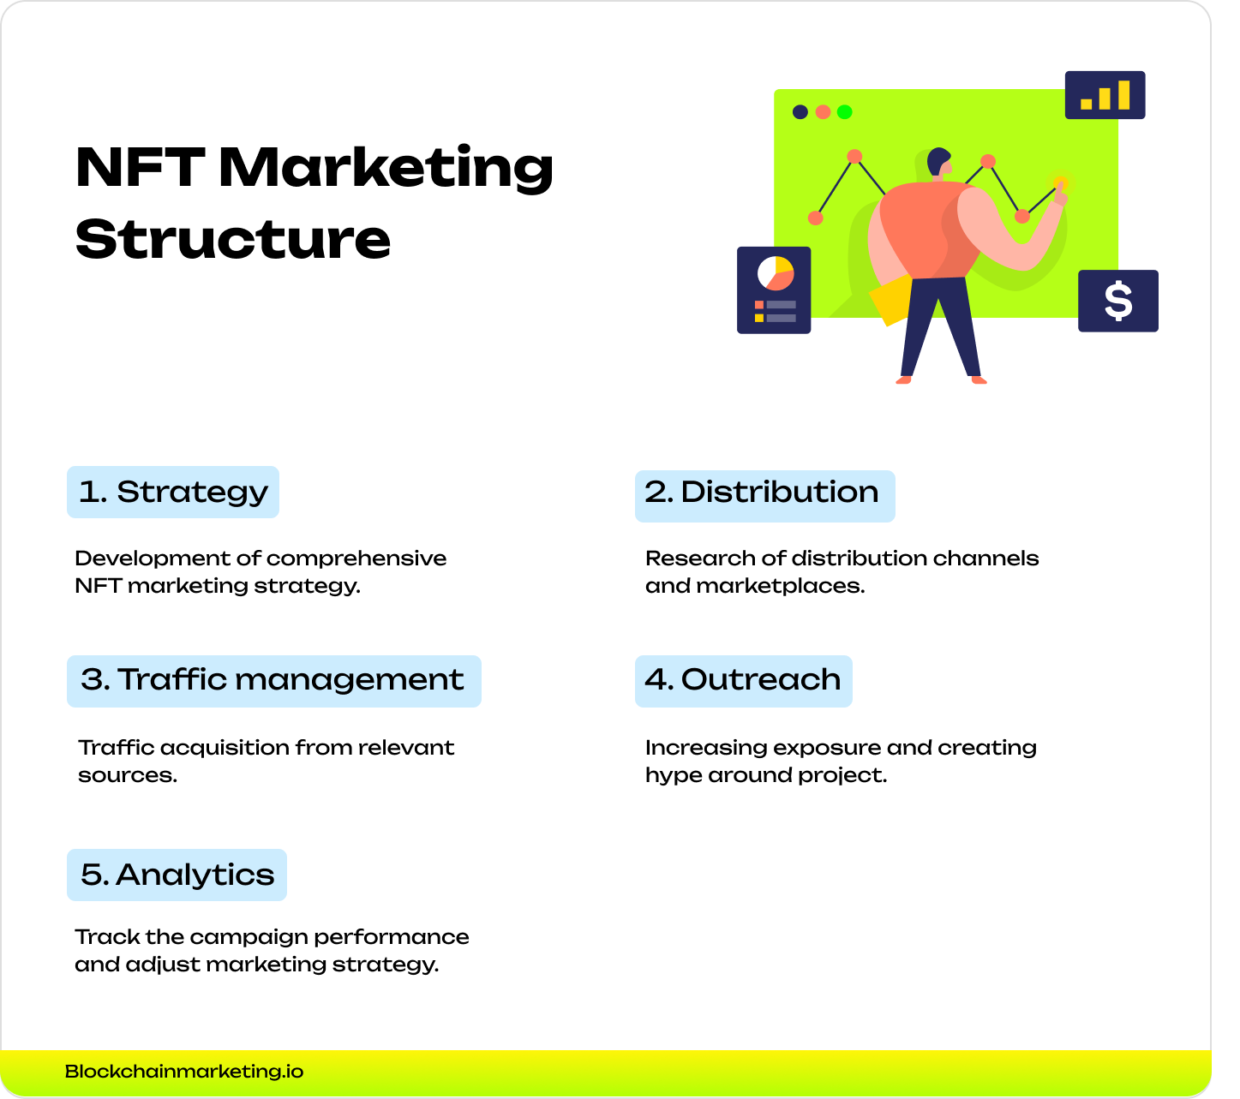 NFT Marketing Structure